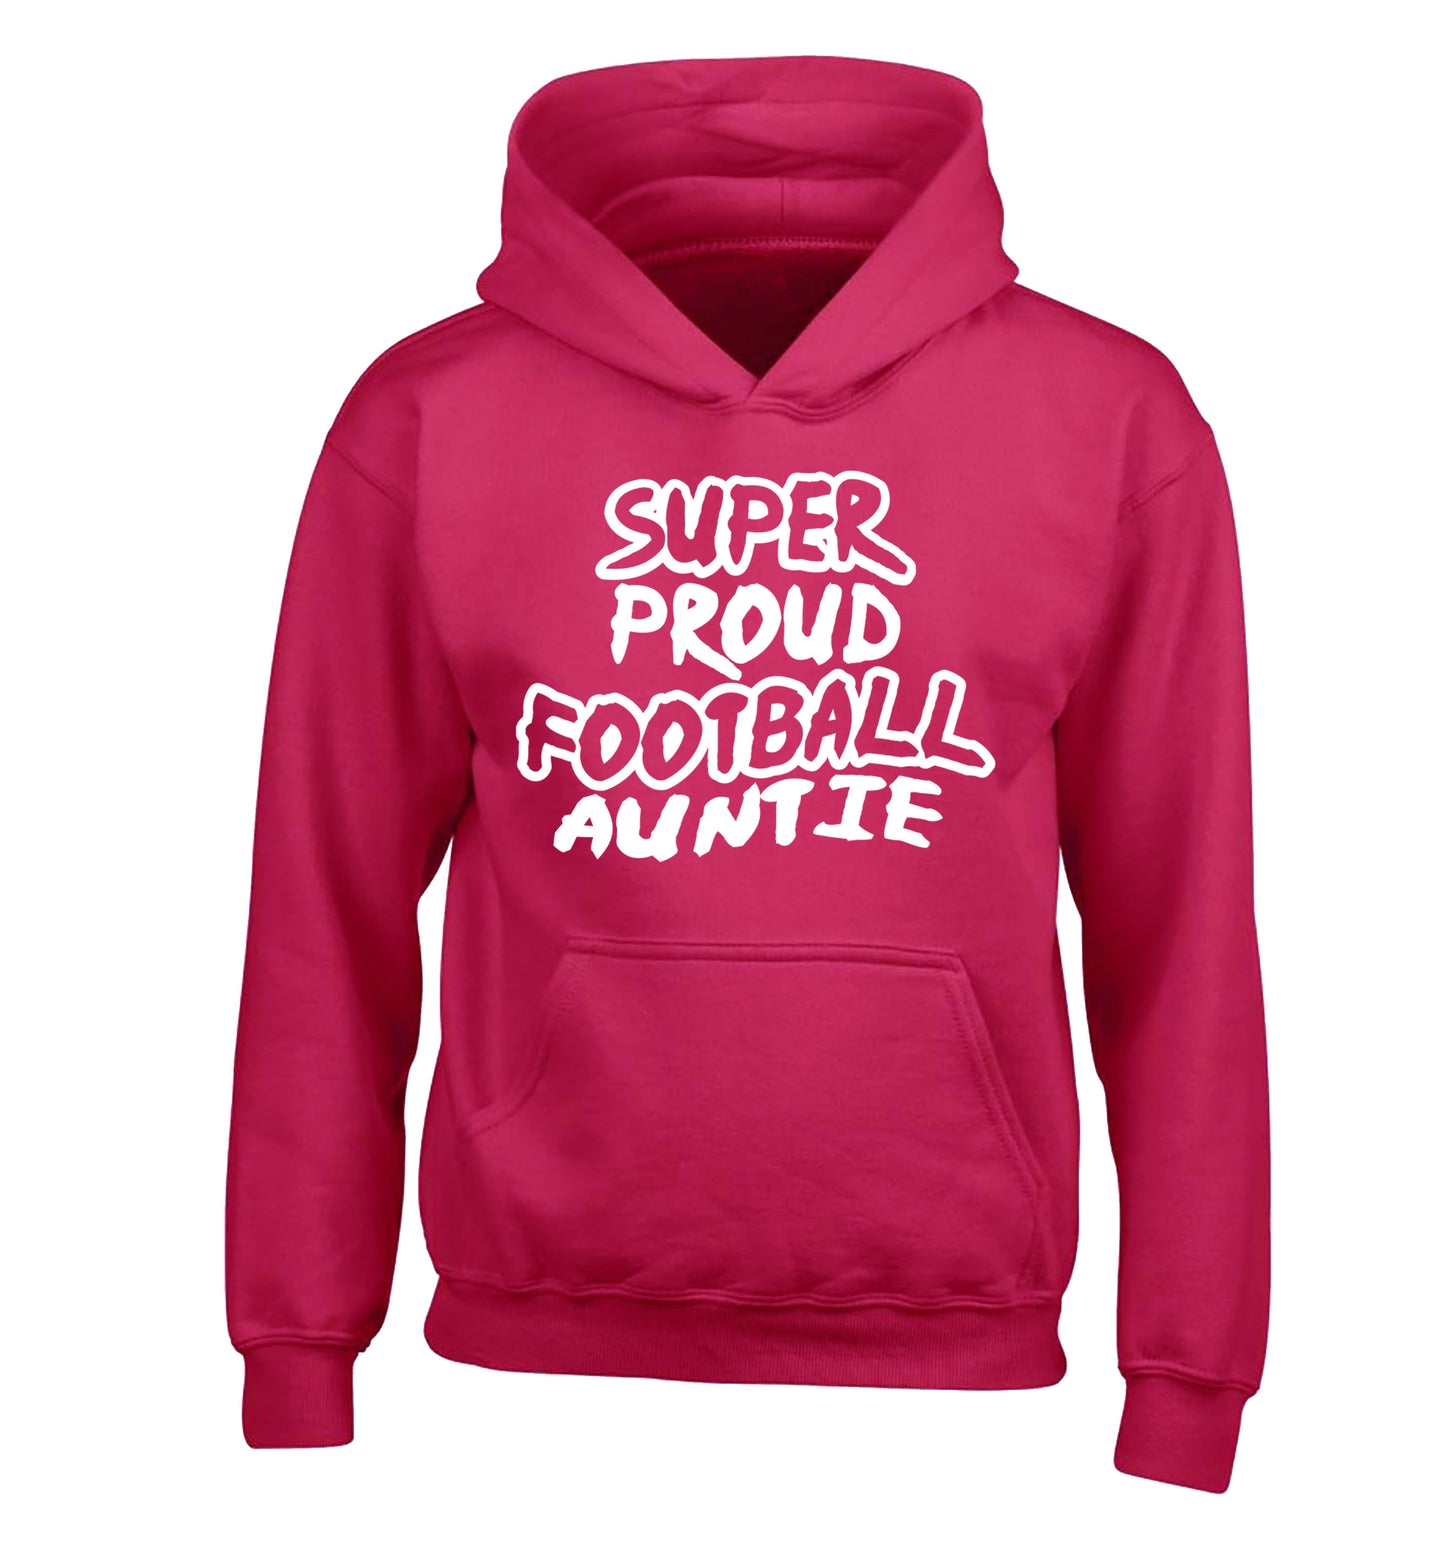 Super proud football auntie children's pink hoodie 12-14 Years